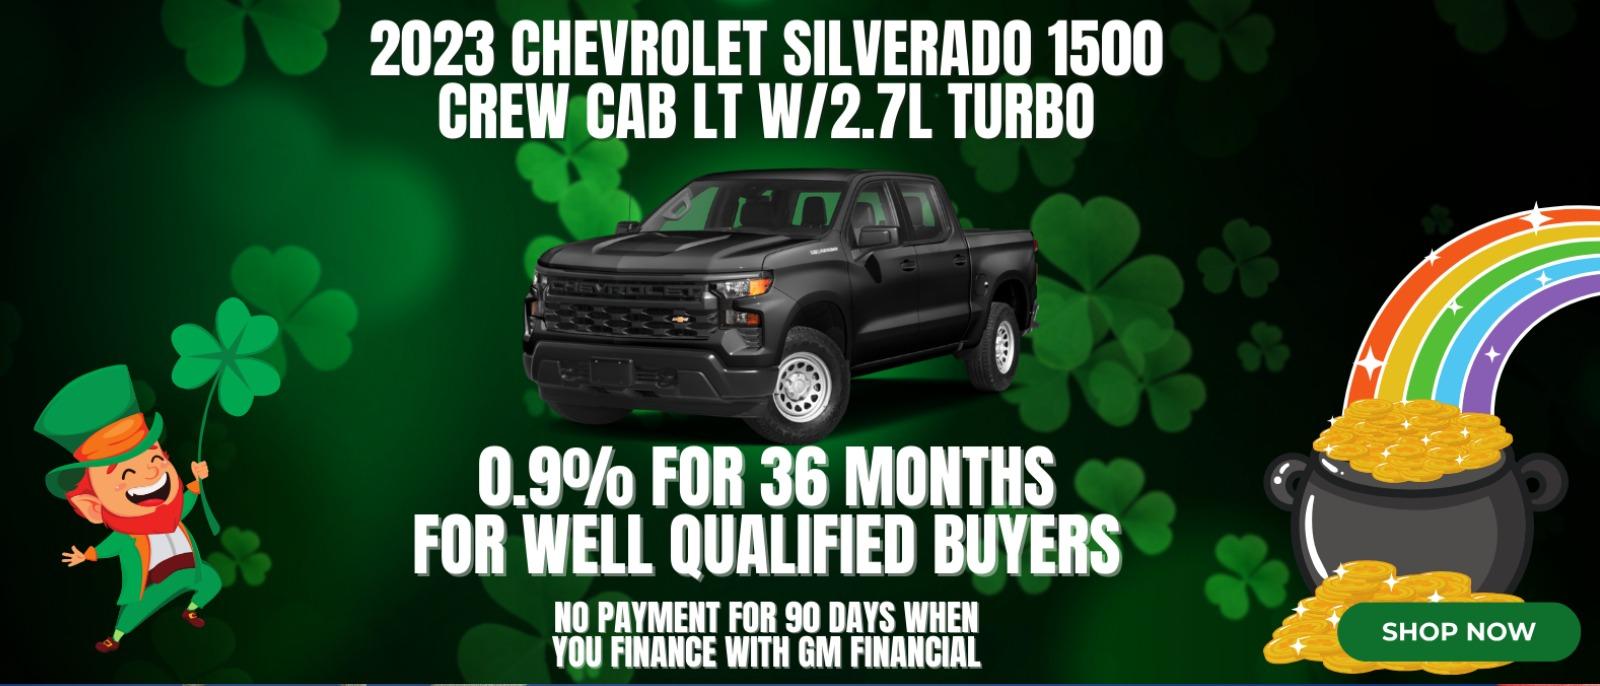 2023 Chevrolet Silverado 1500 Crew Cab LT w/2.7L turbo